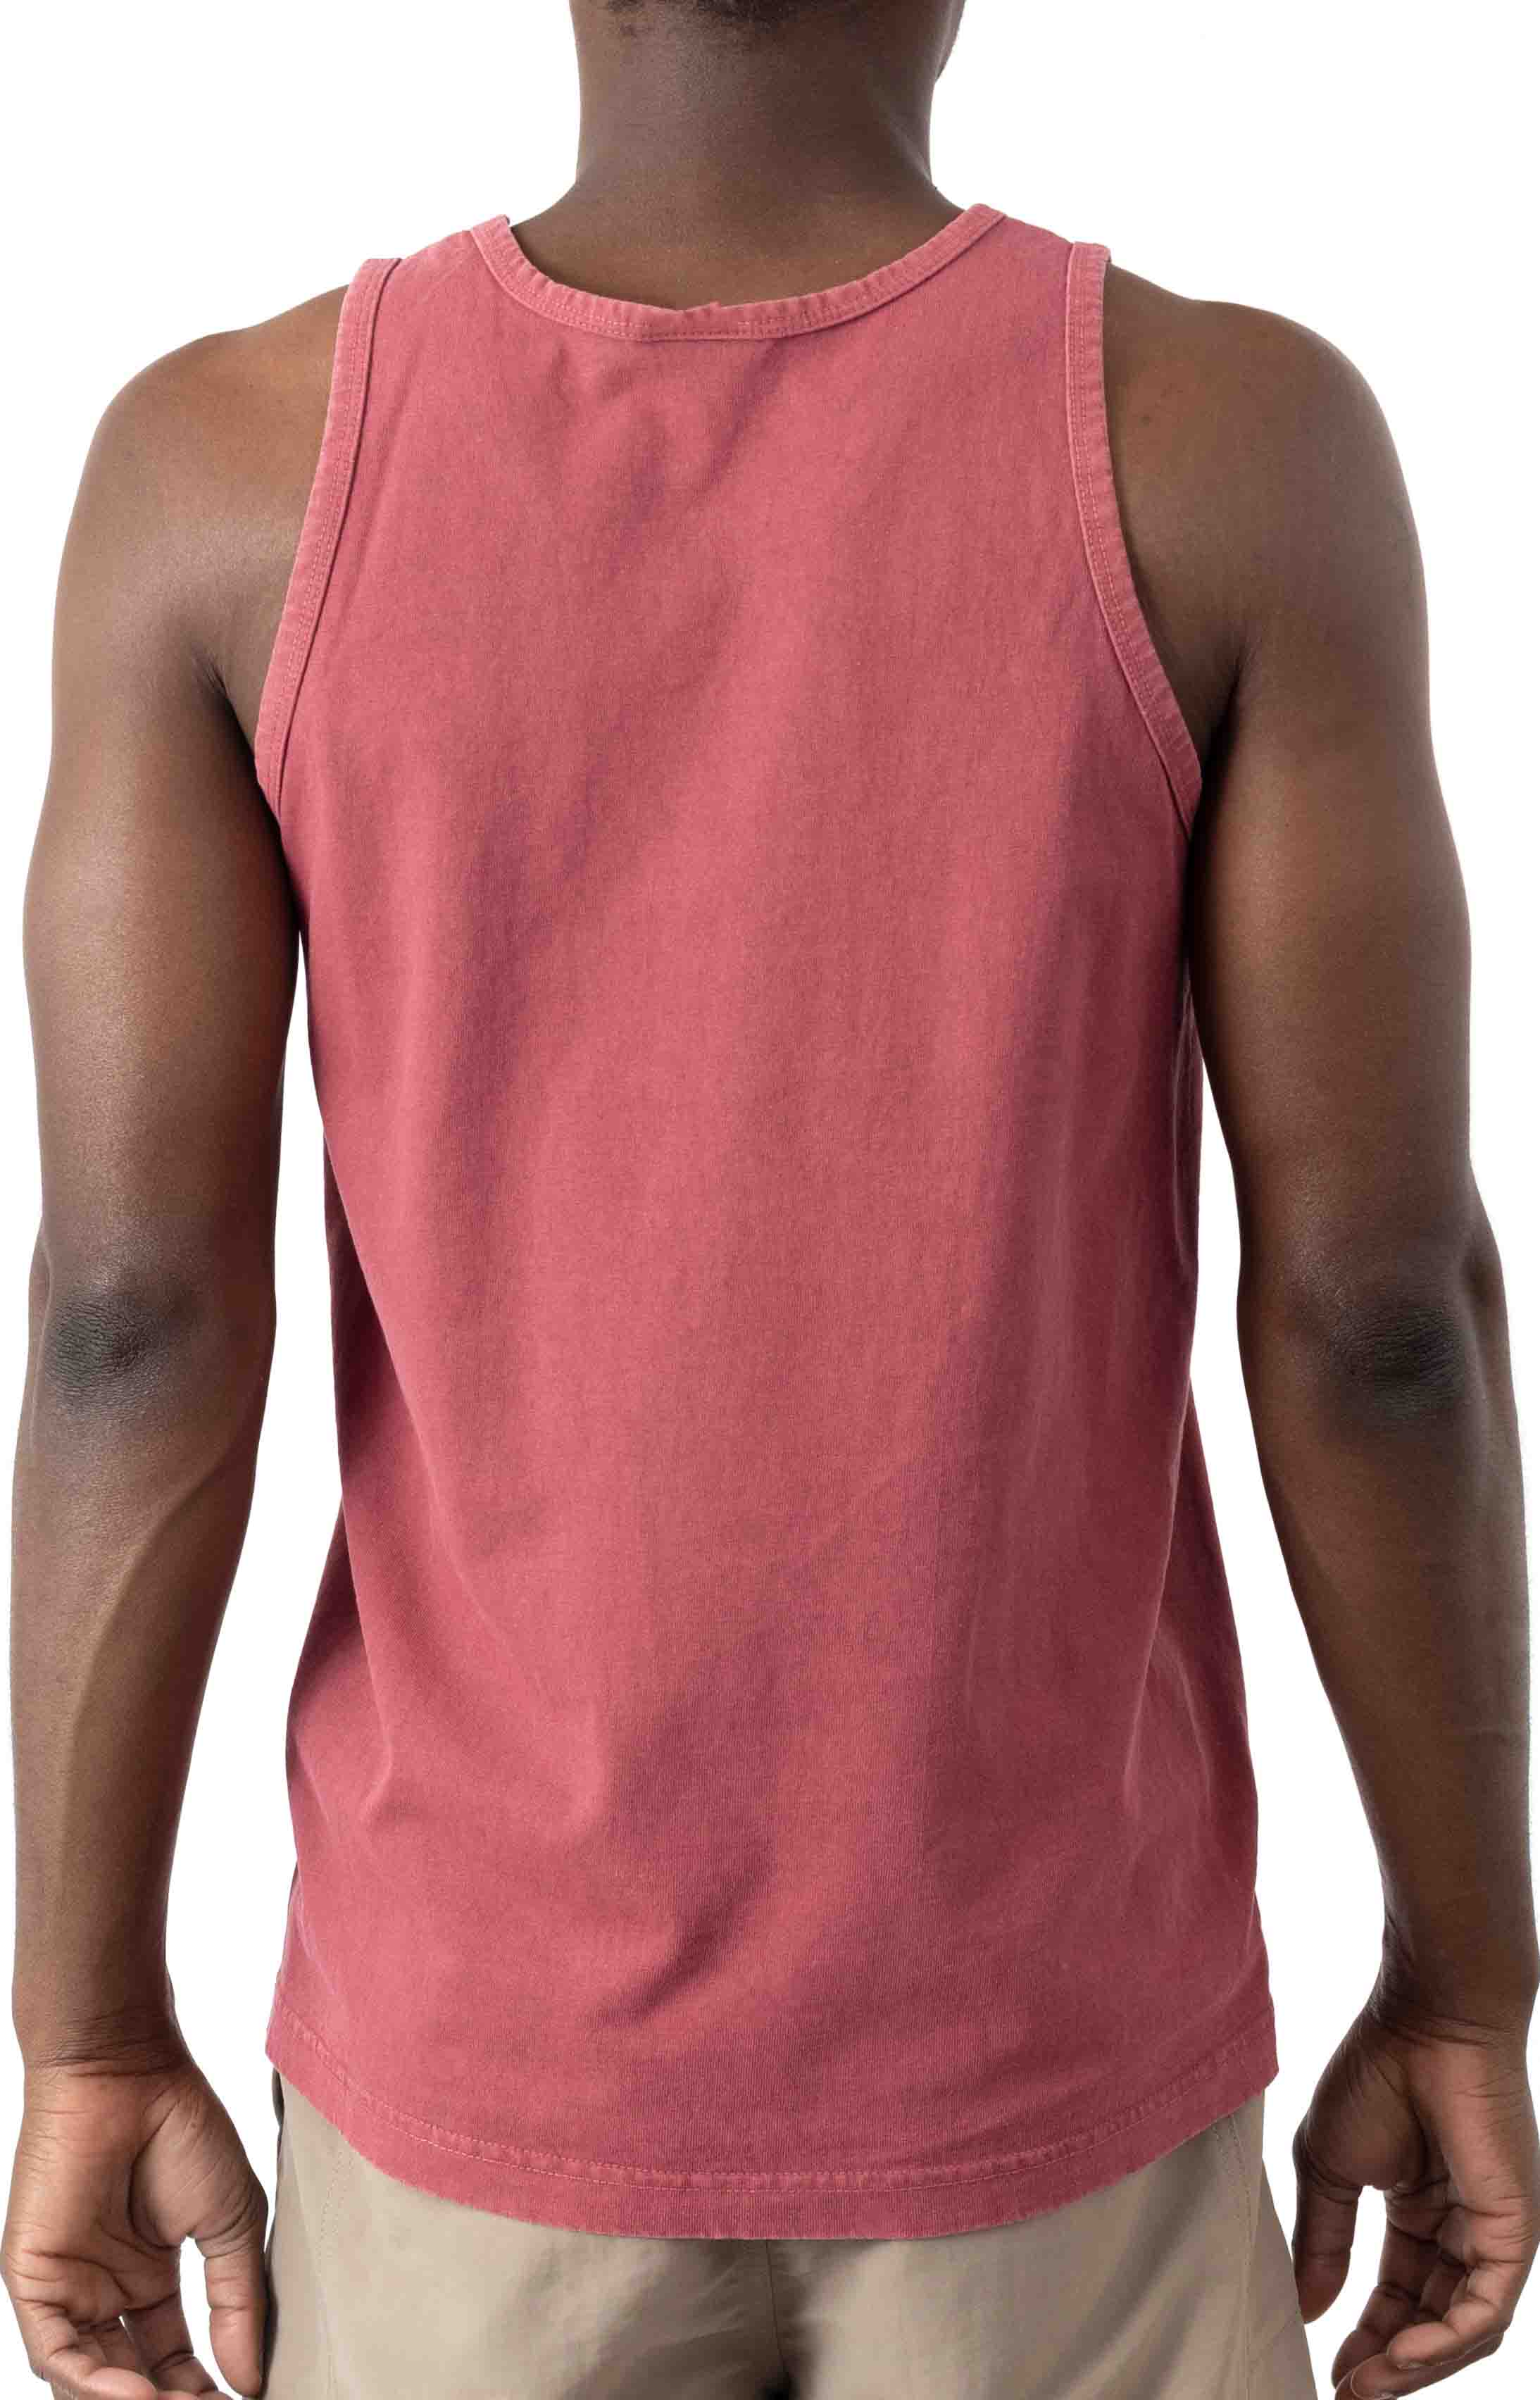 Garment Dye Tank Top - Clay Red